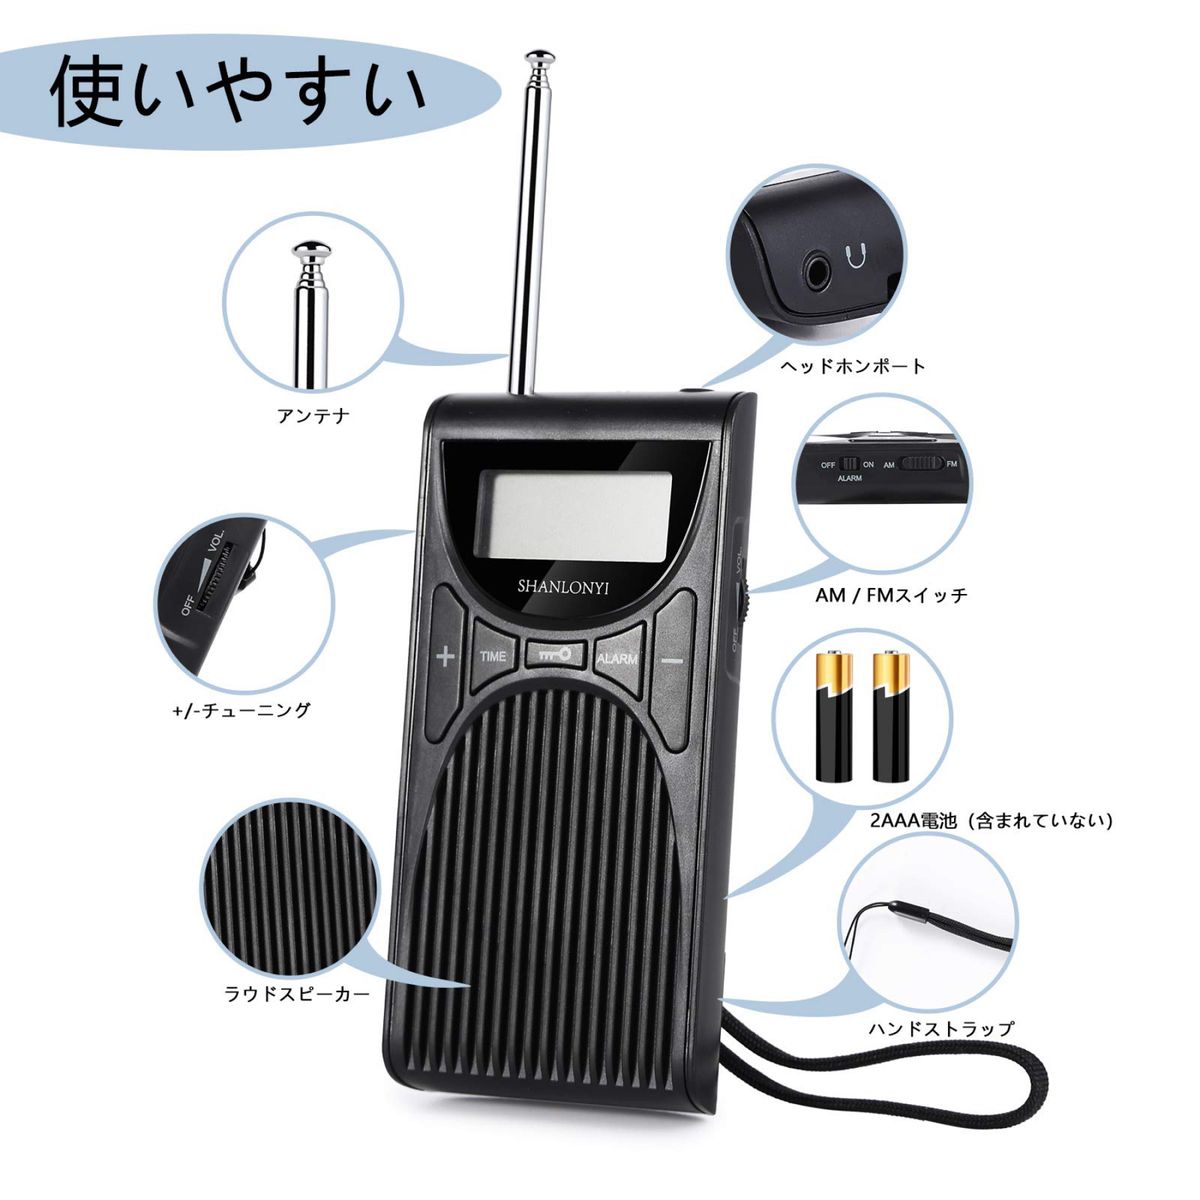 SHANLONYIポータブルラジオ 小型 ポケットラジオ 高感度 防災 ミニラジオ FM/AM/ワイドFM対応 乾電池式 多機能 